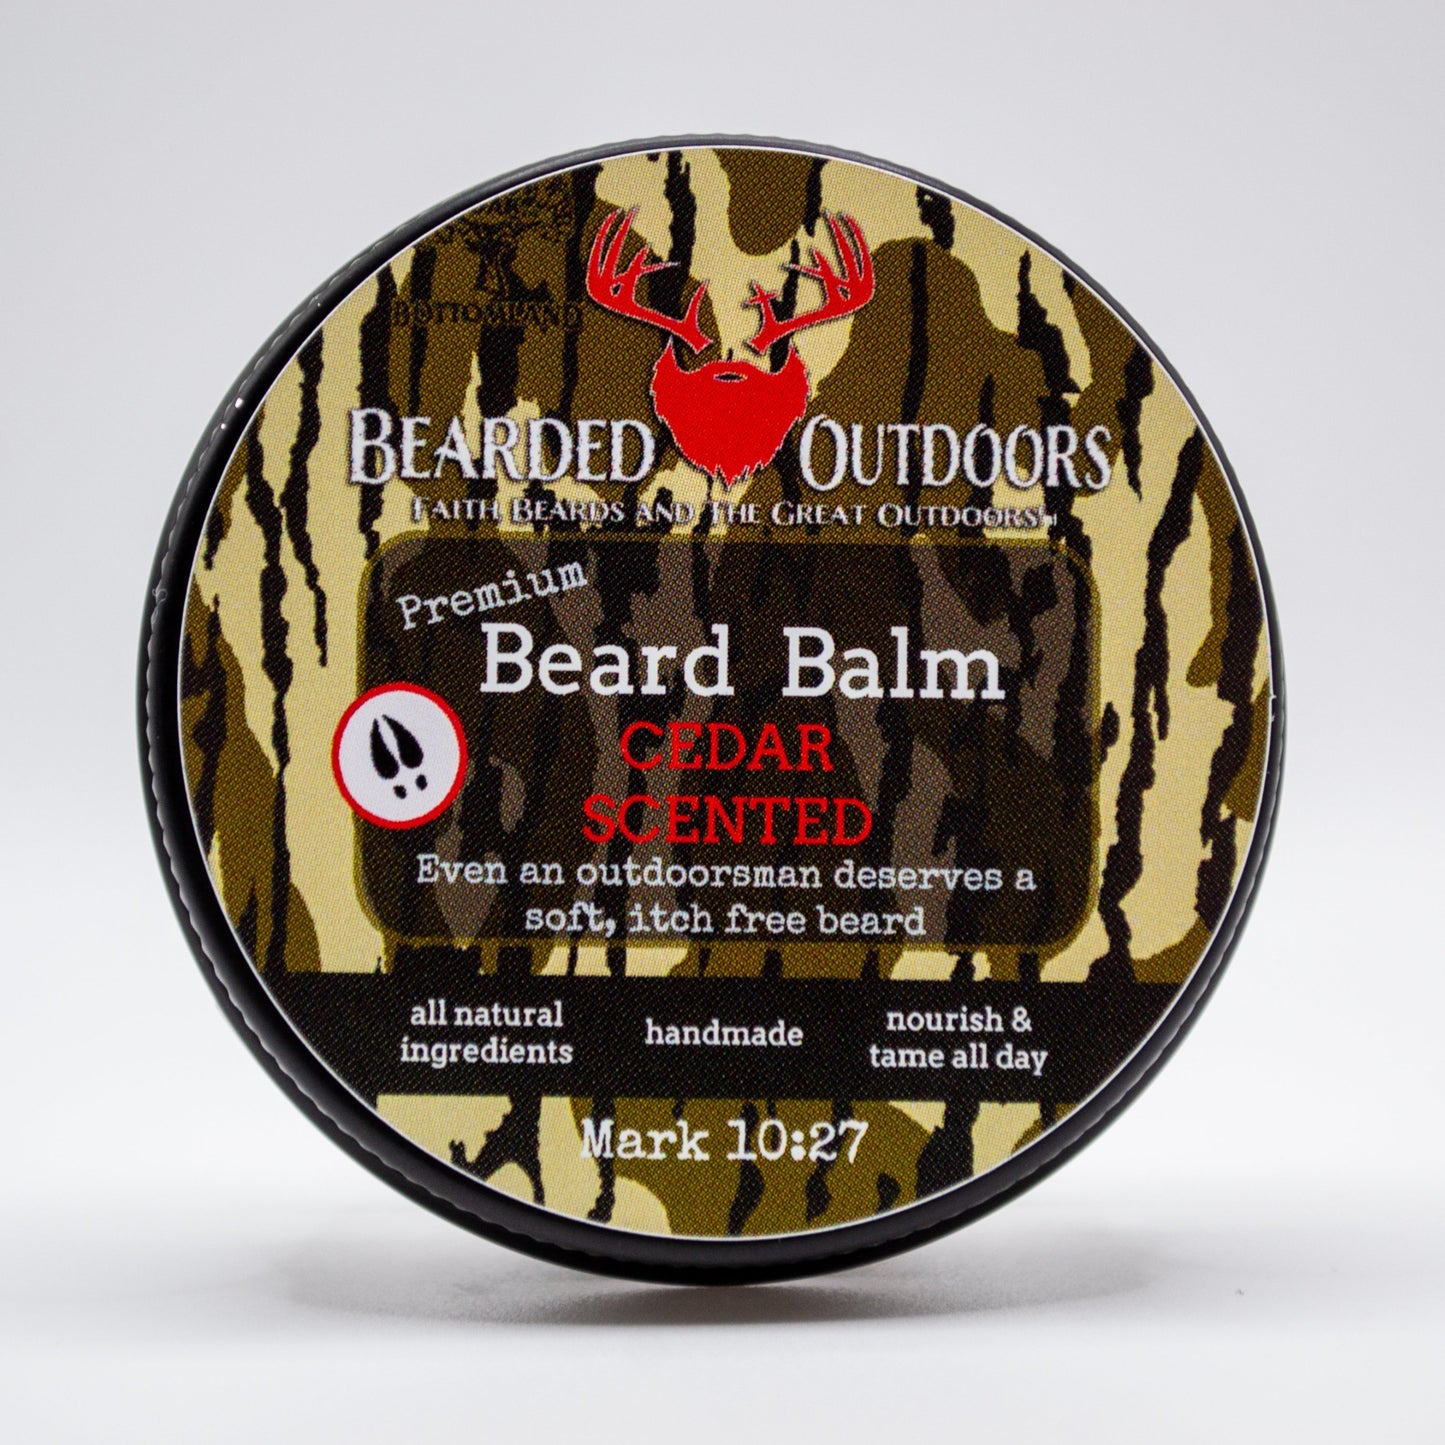 Mossy Oak Cedar Scented Premium Beard Balm wrapped in Bottomland Camo by Bearded Outdoors